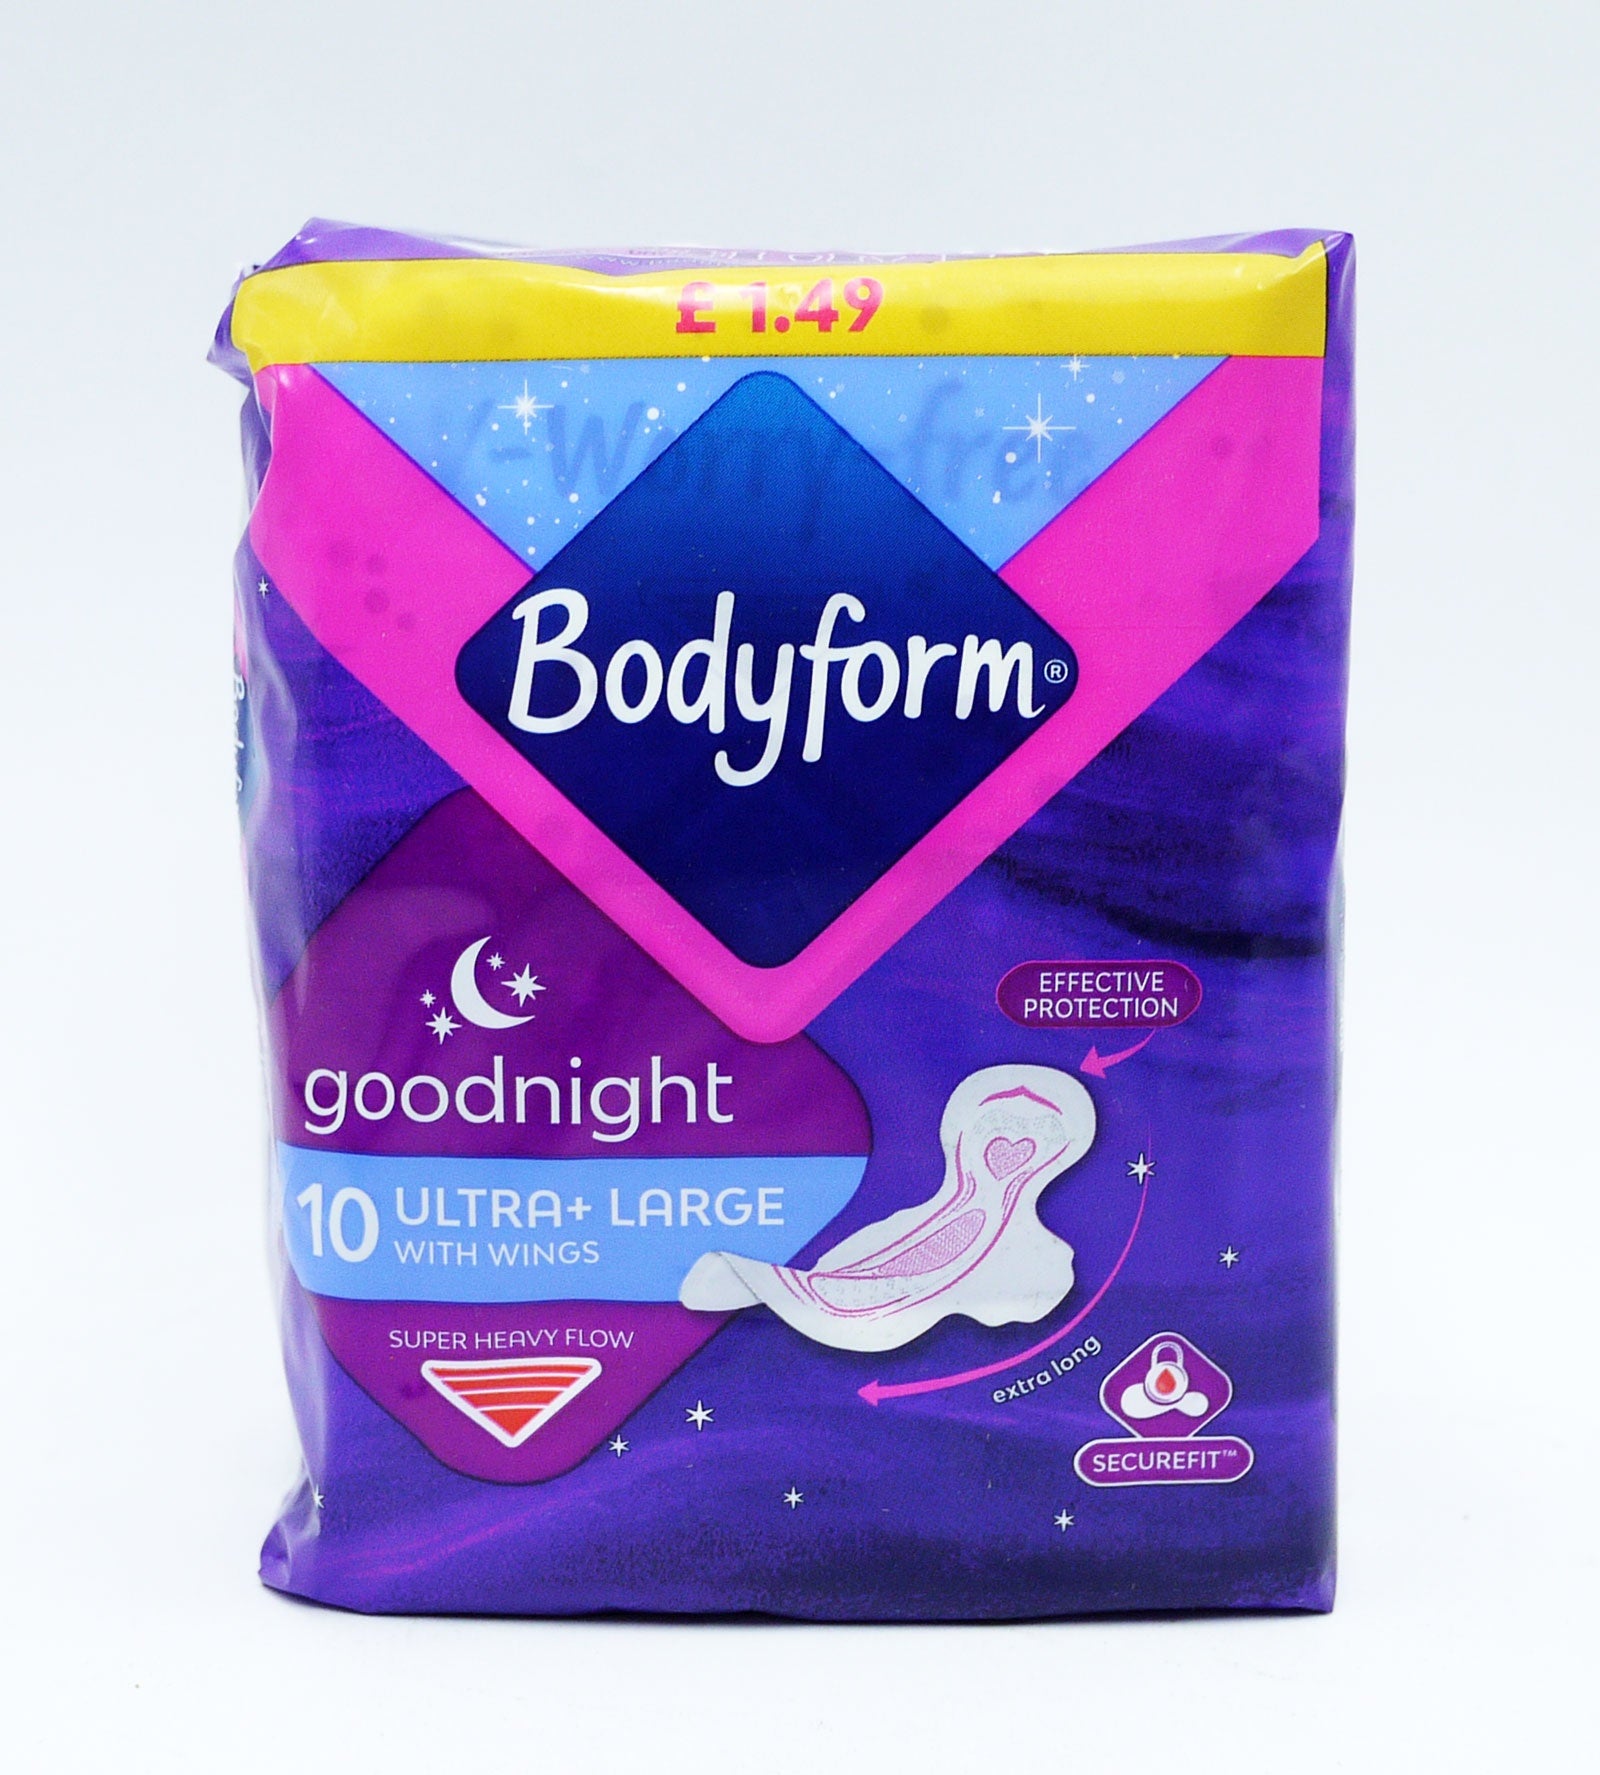 Bodyform Ultra Goodnight with wings 10pk